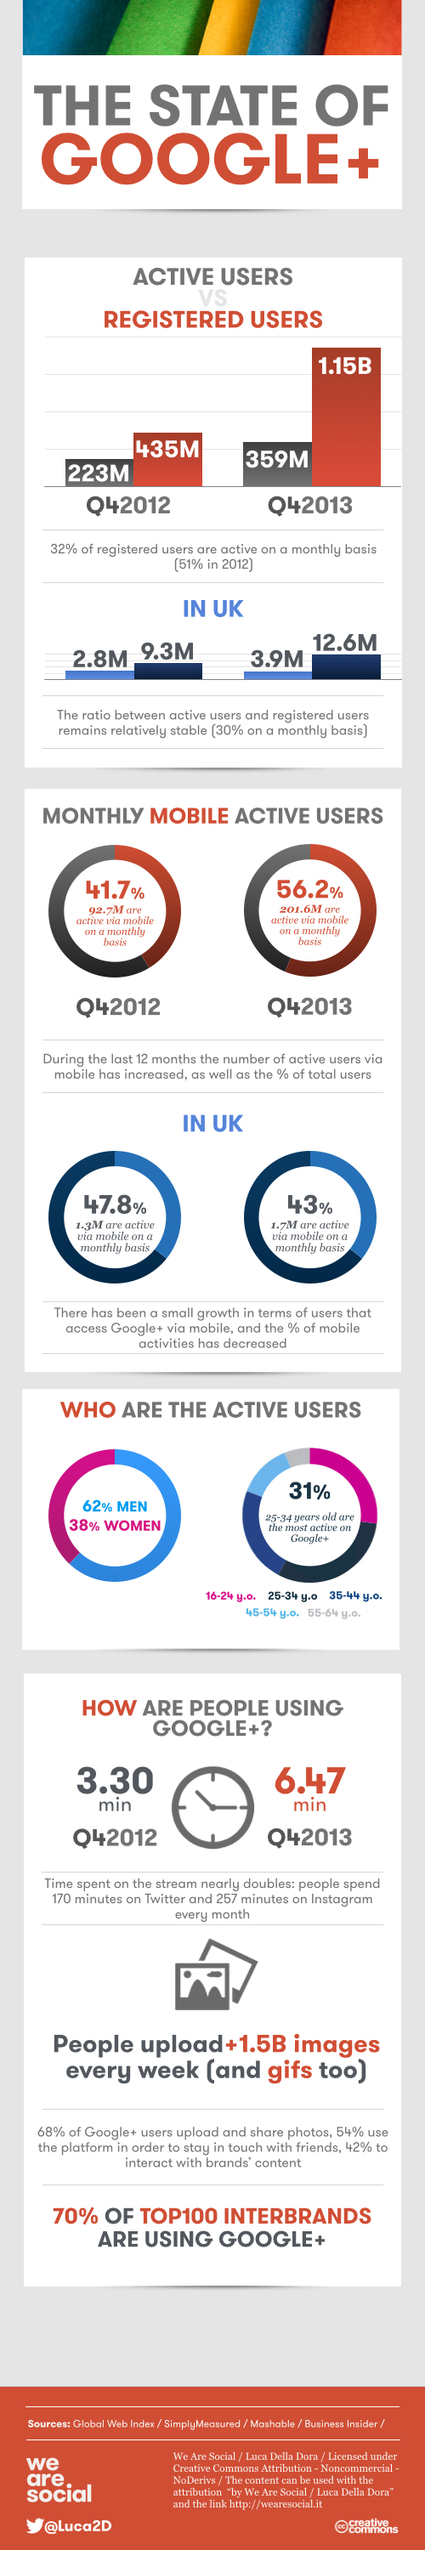 Google+ now has 1.15 billion users! | digital marketing strategy | Scoop.it